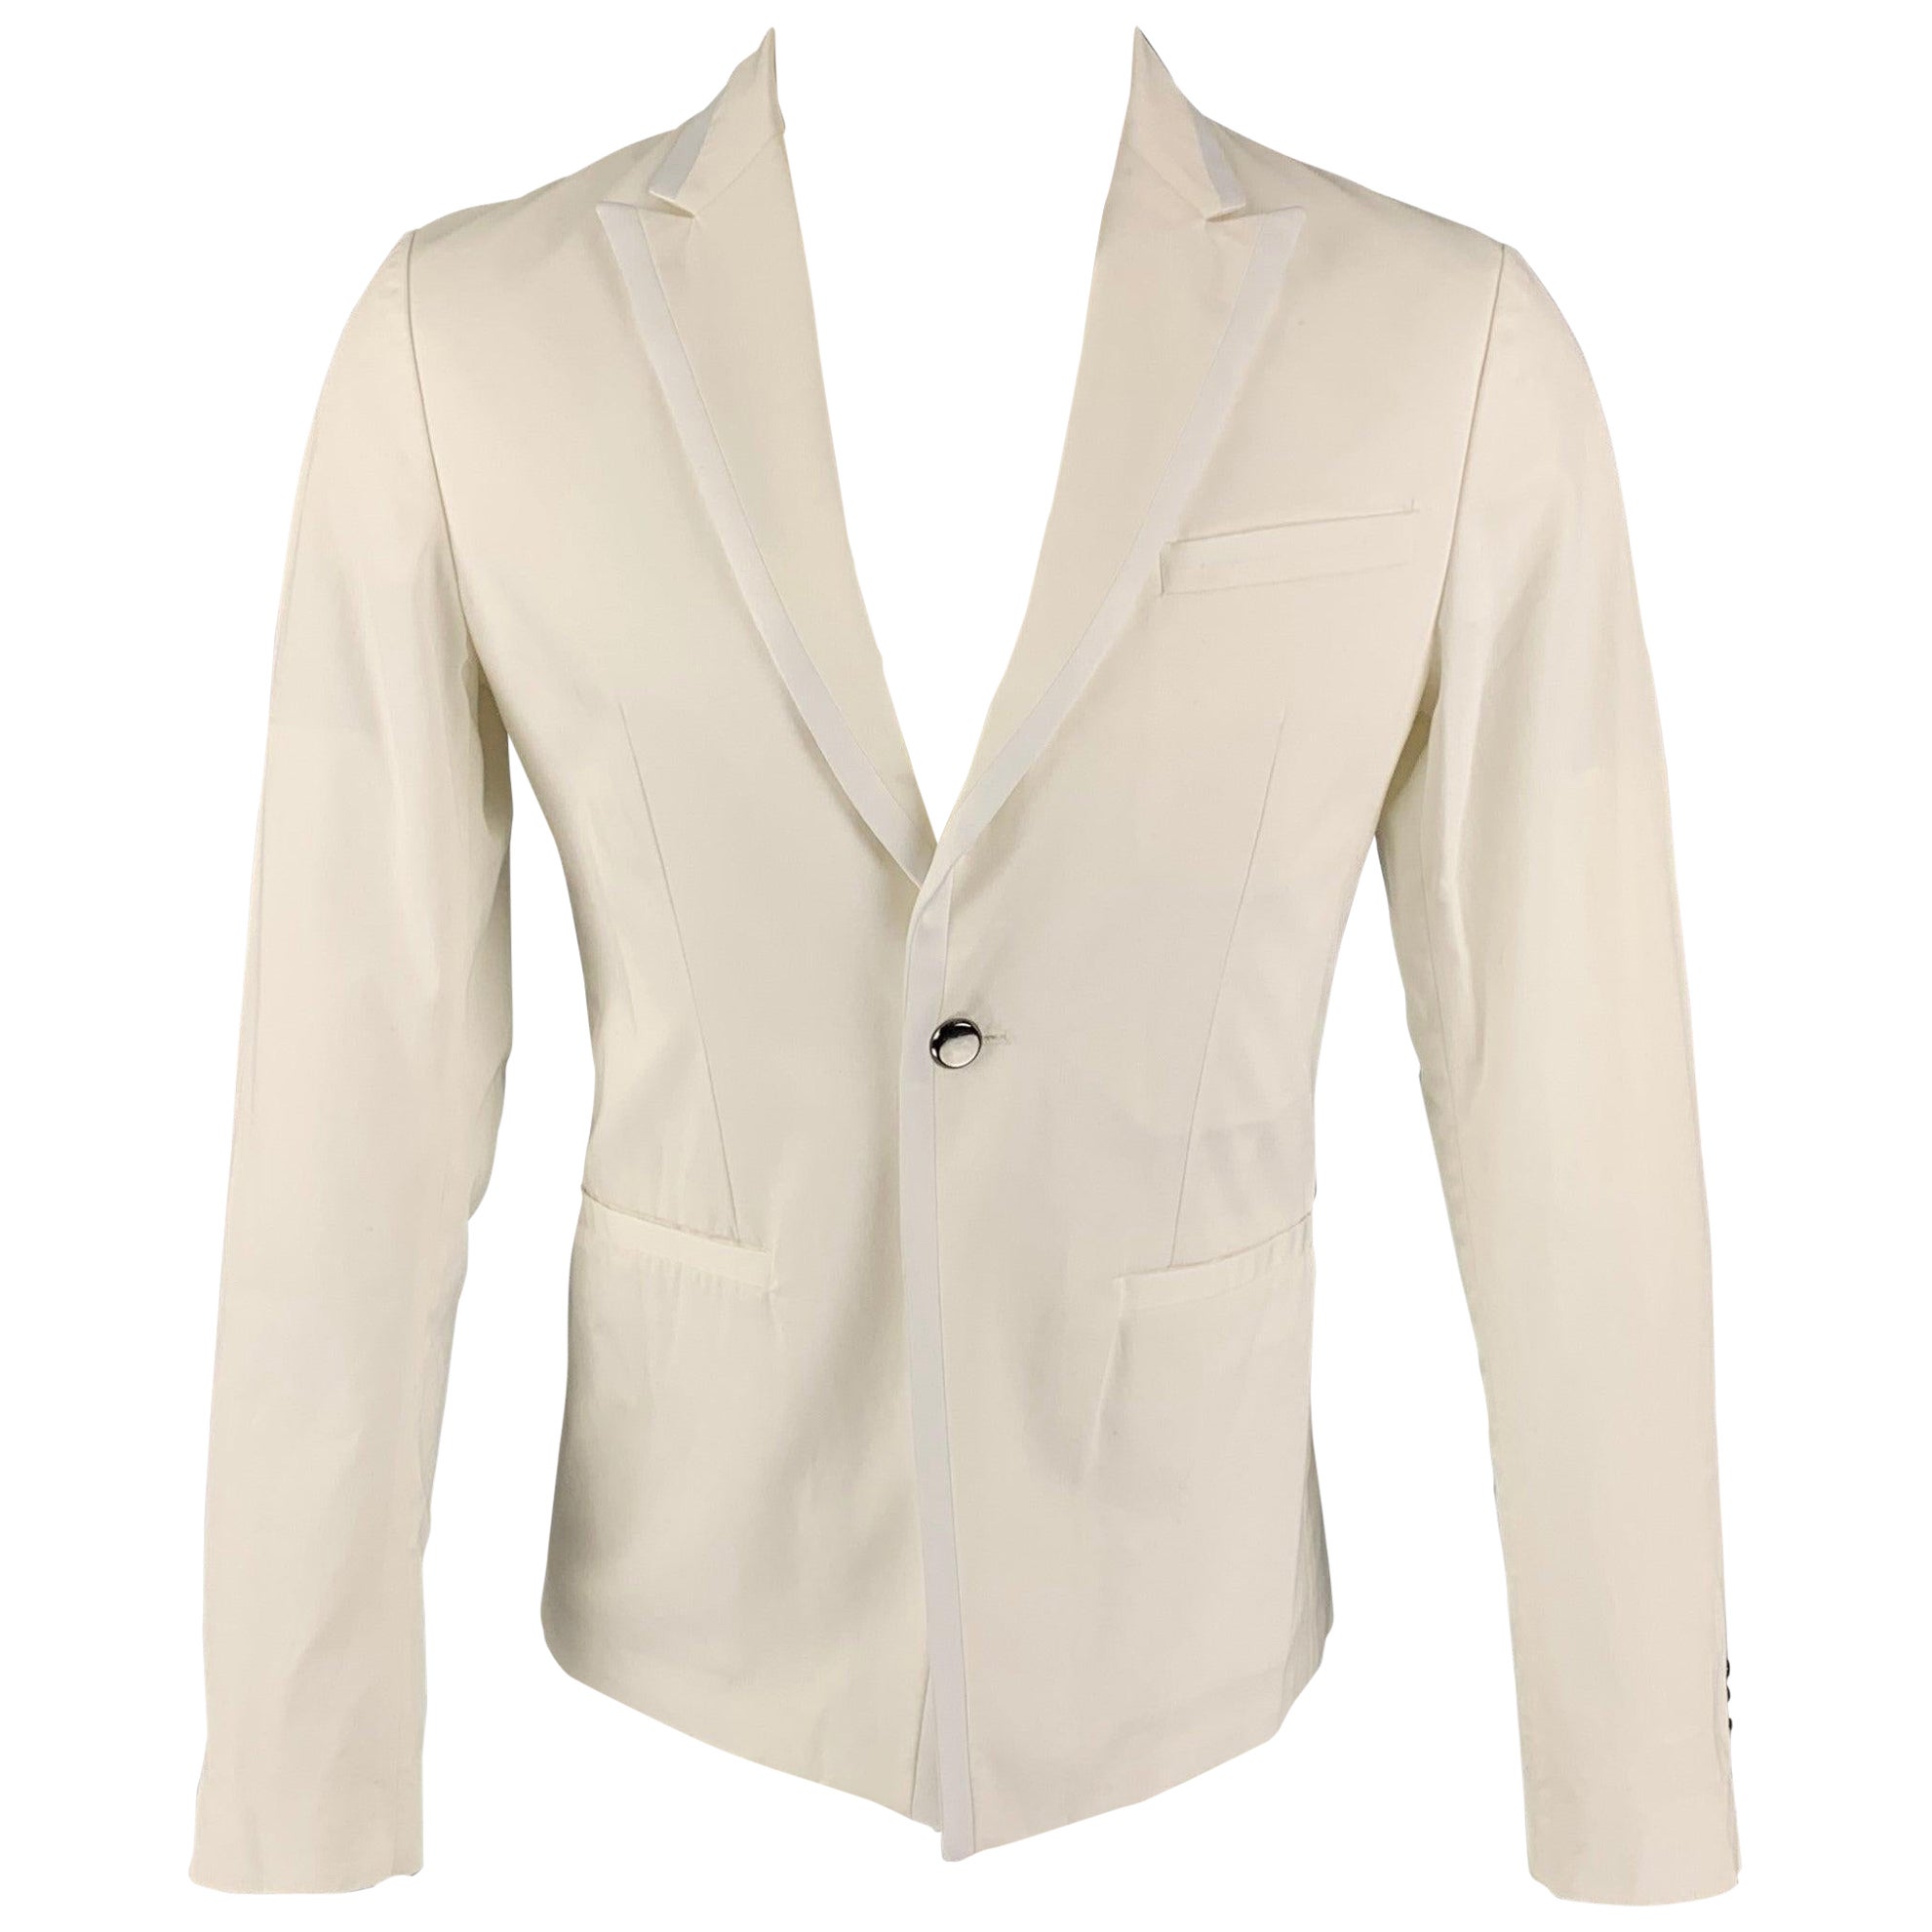 JUST CAVALLI Size 38 White Cotton Peak Lapel Sport Coat For Sale